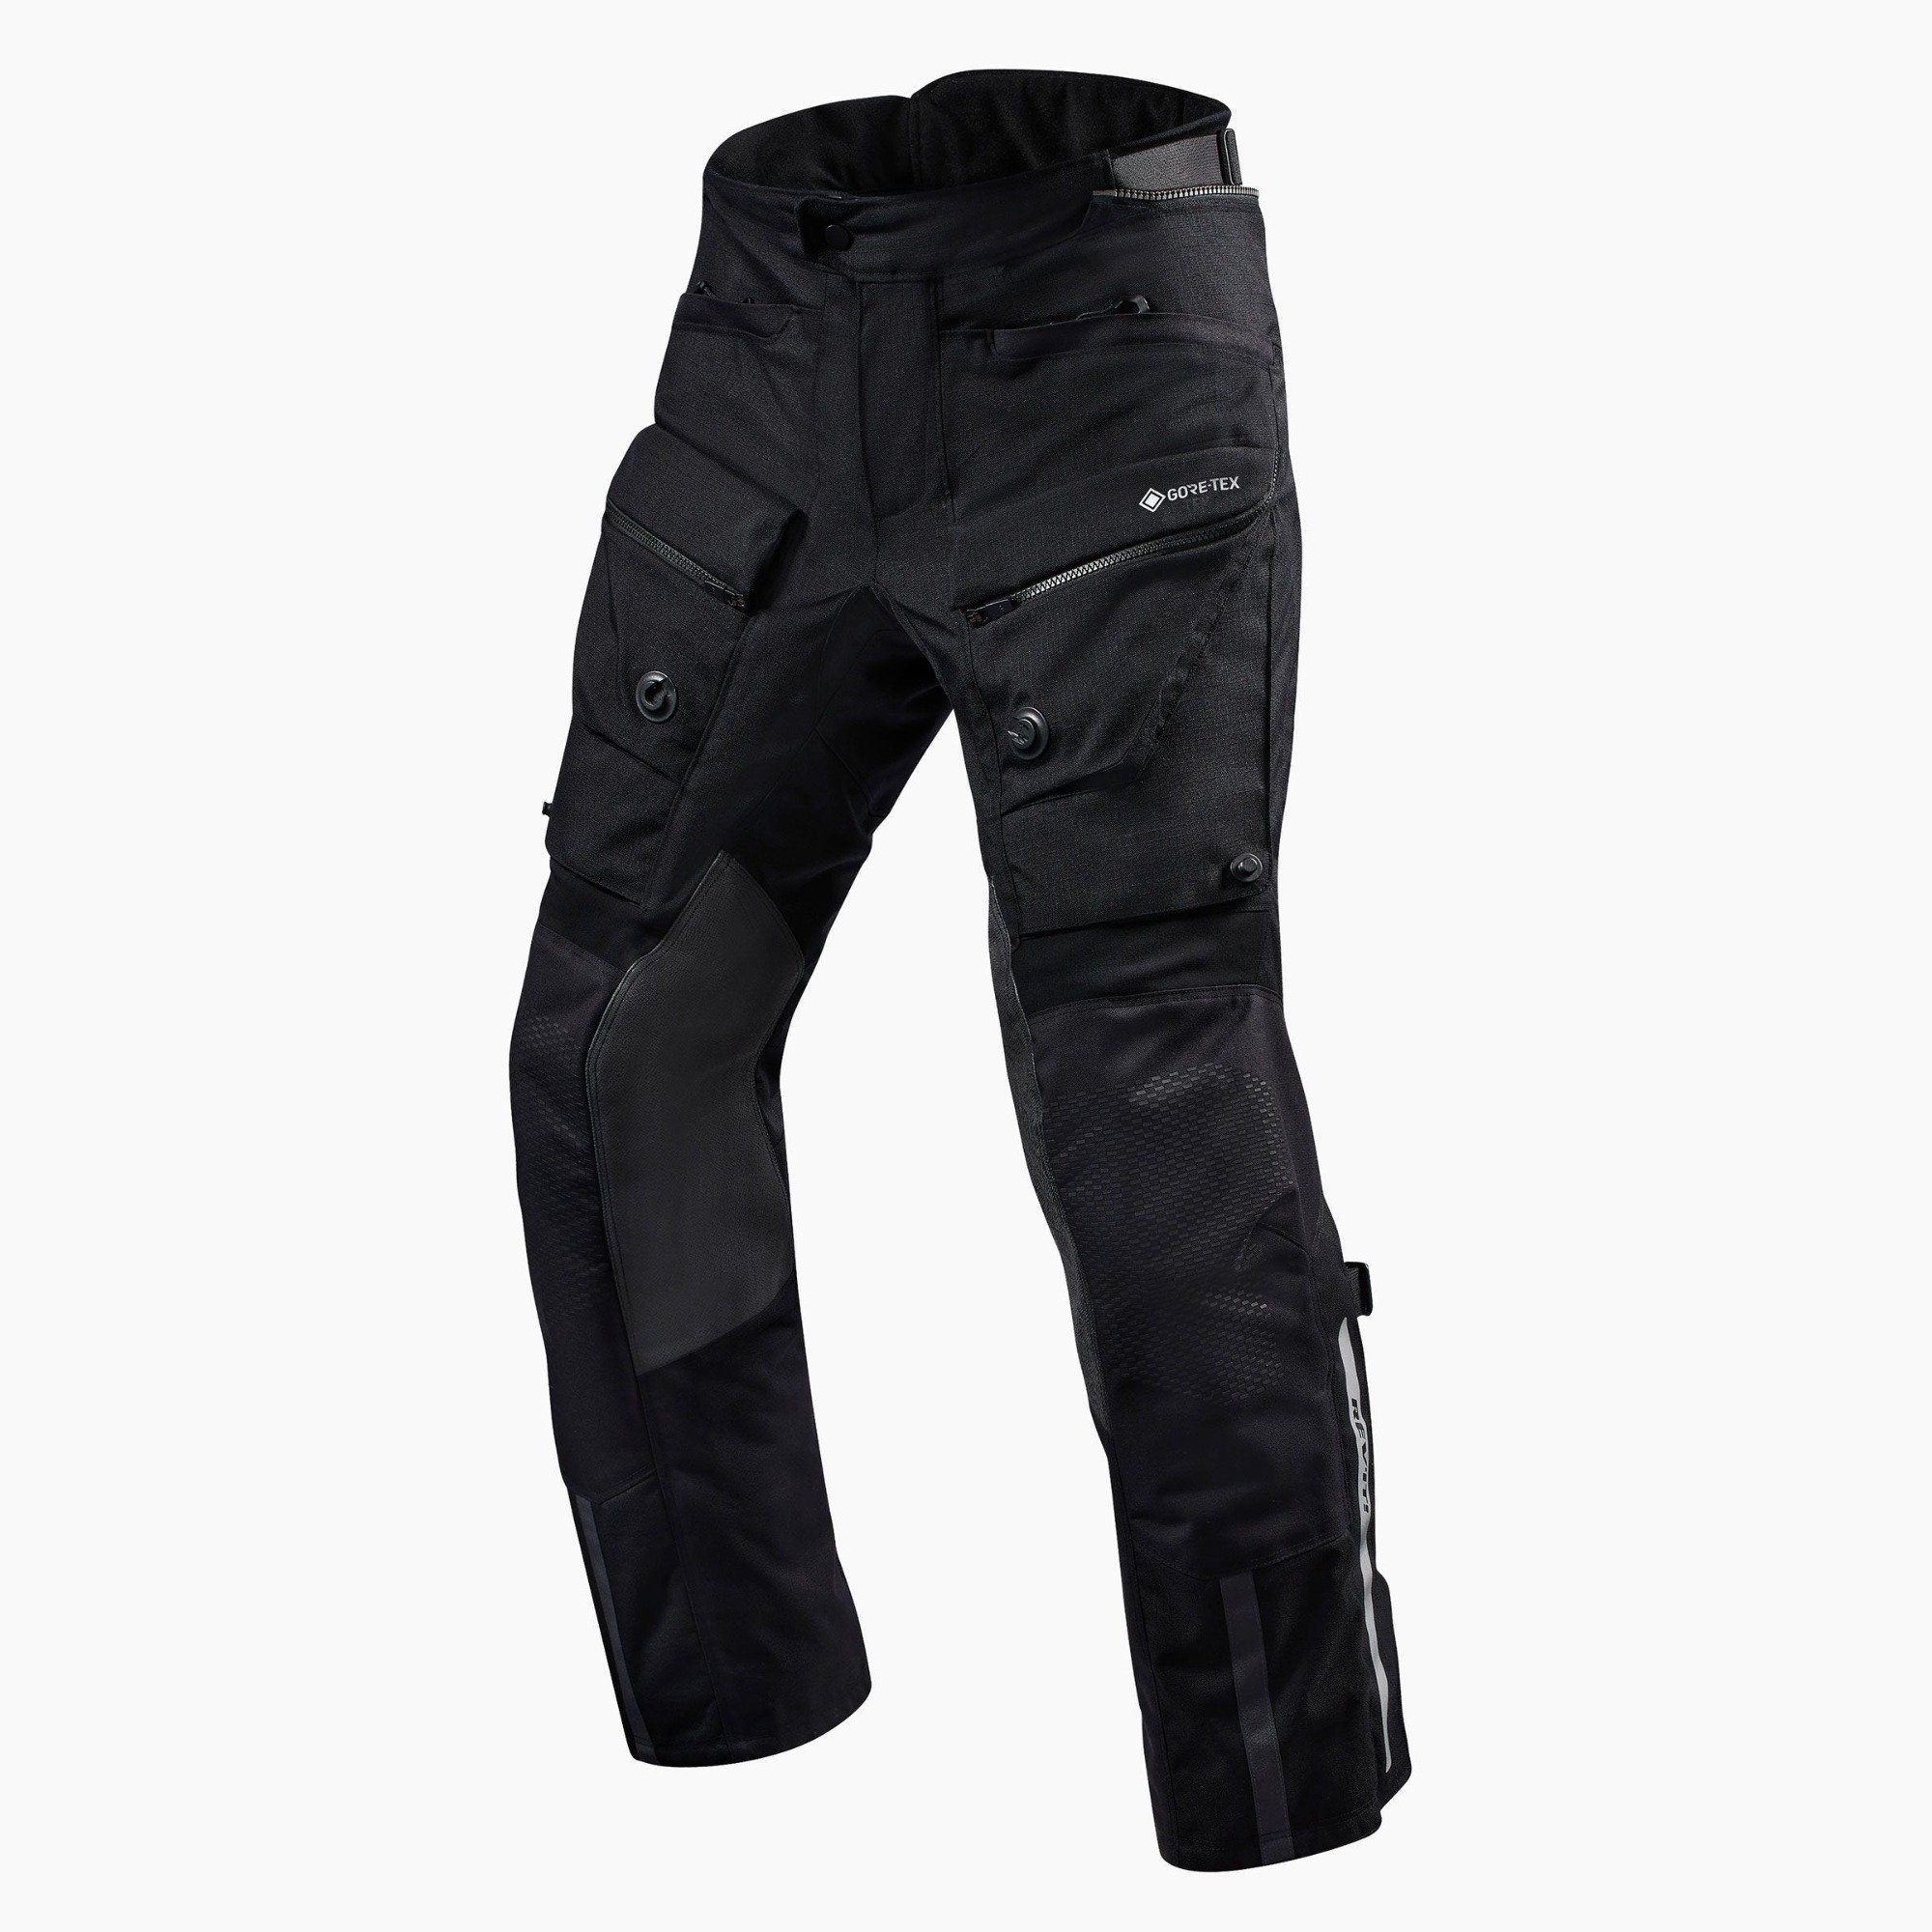 Image of REV'IT! Trousers Defender 3 GTX Black Short Motorcycle Pants Talla M